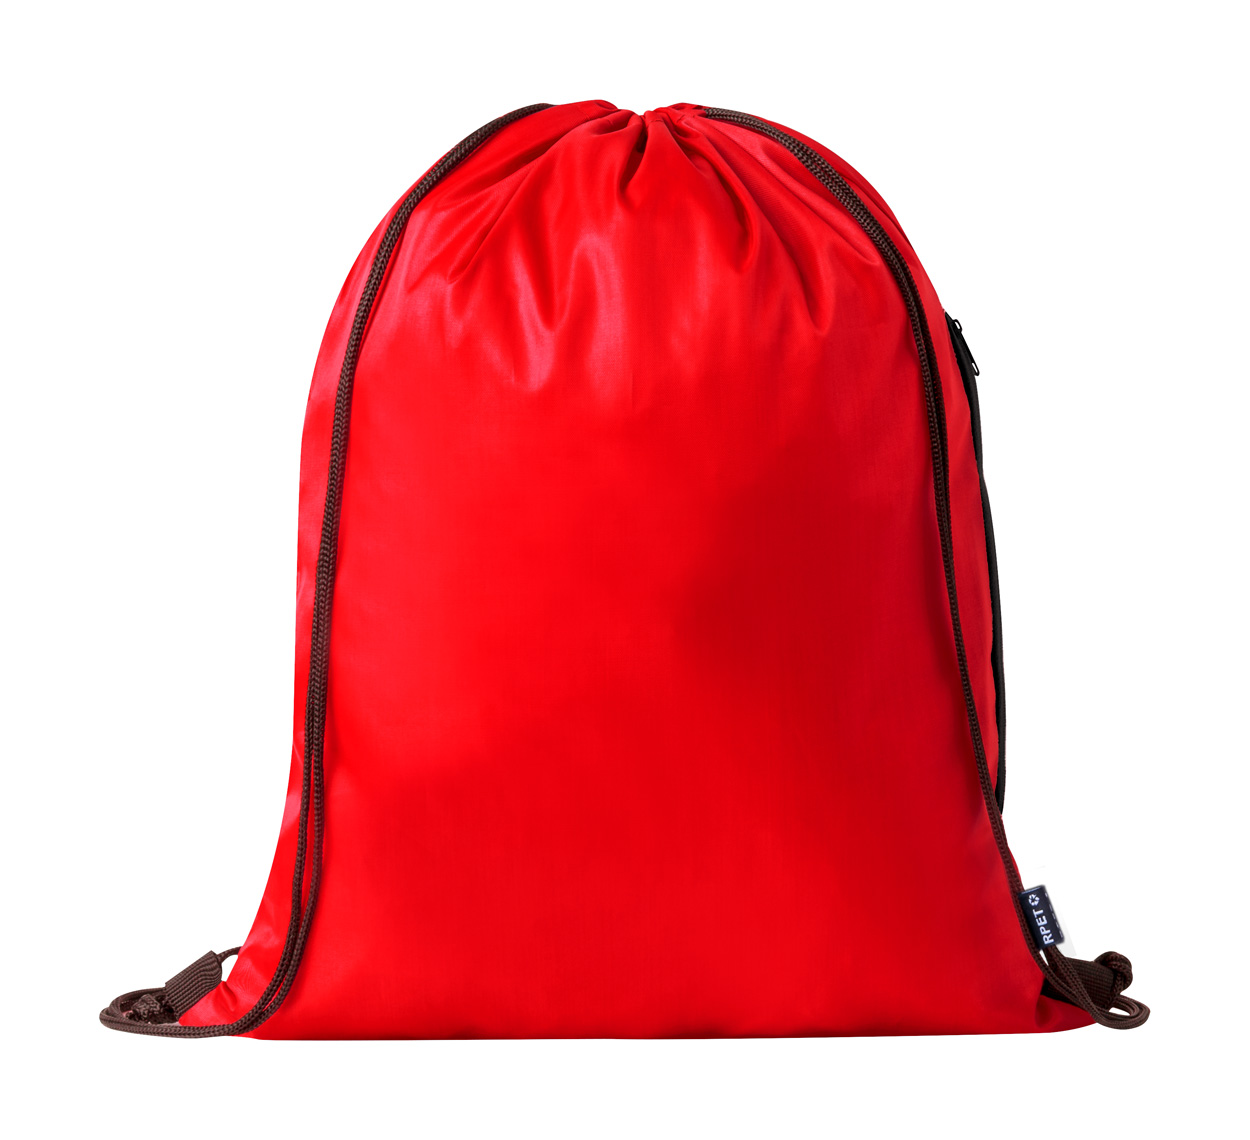 Hildan RPET drawstring bag - red